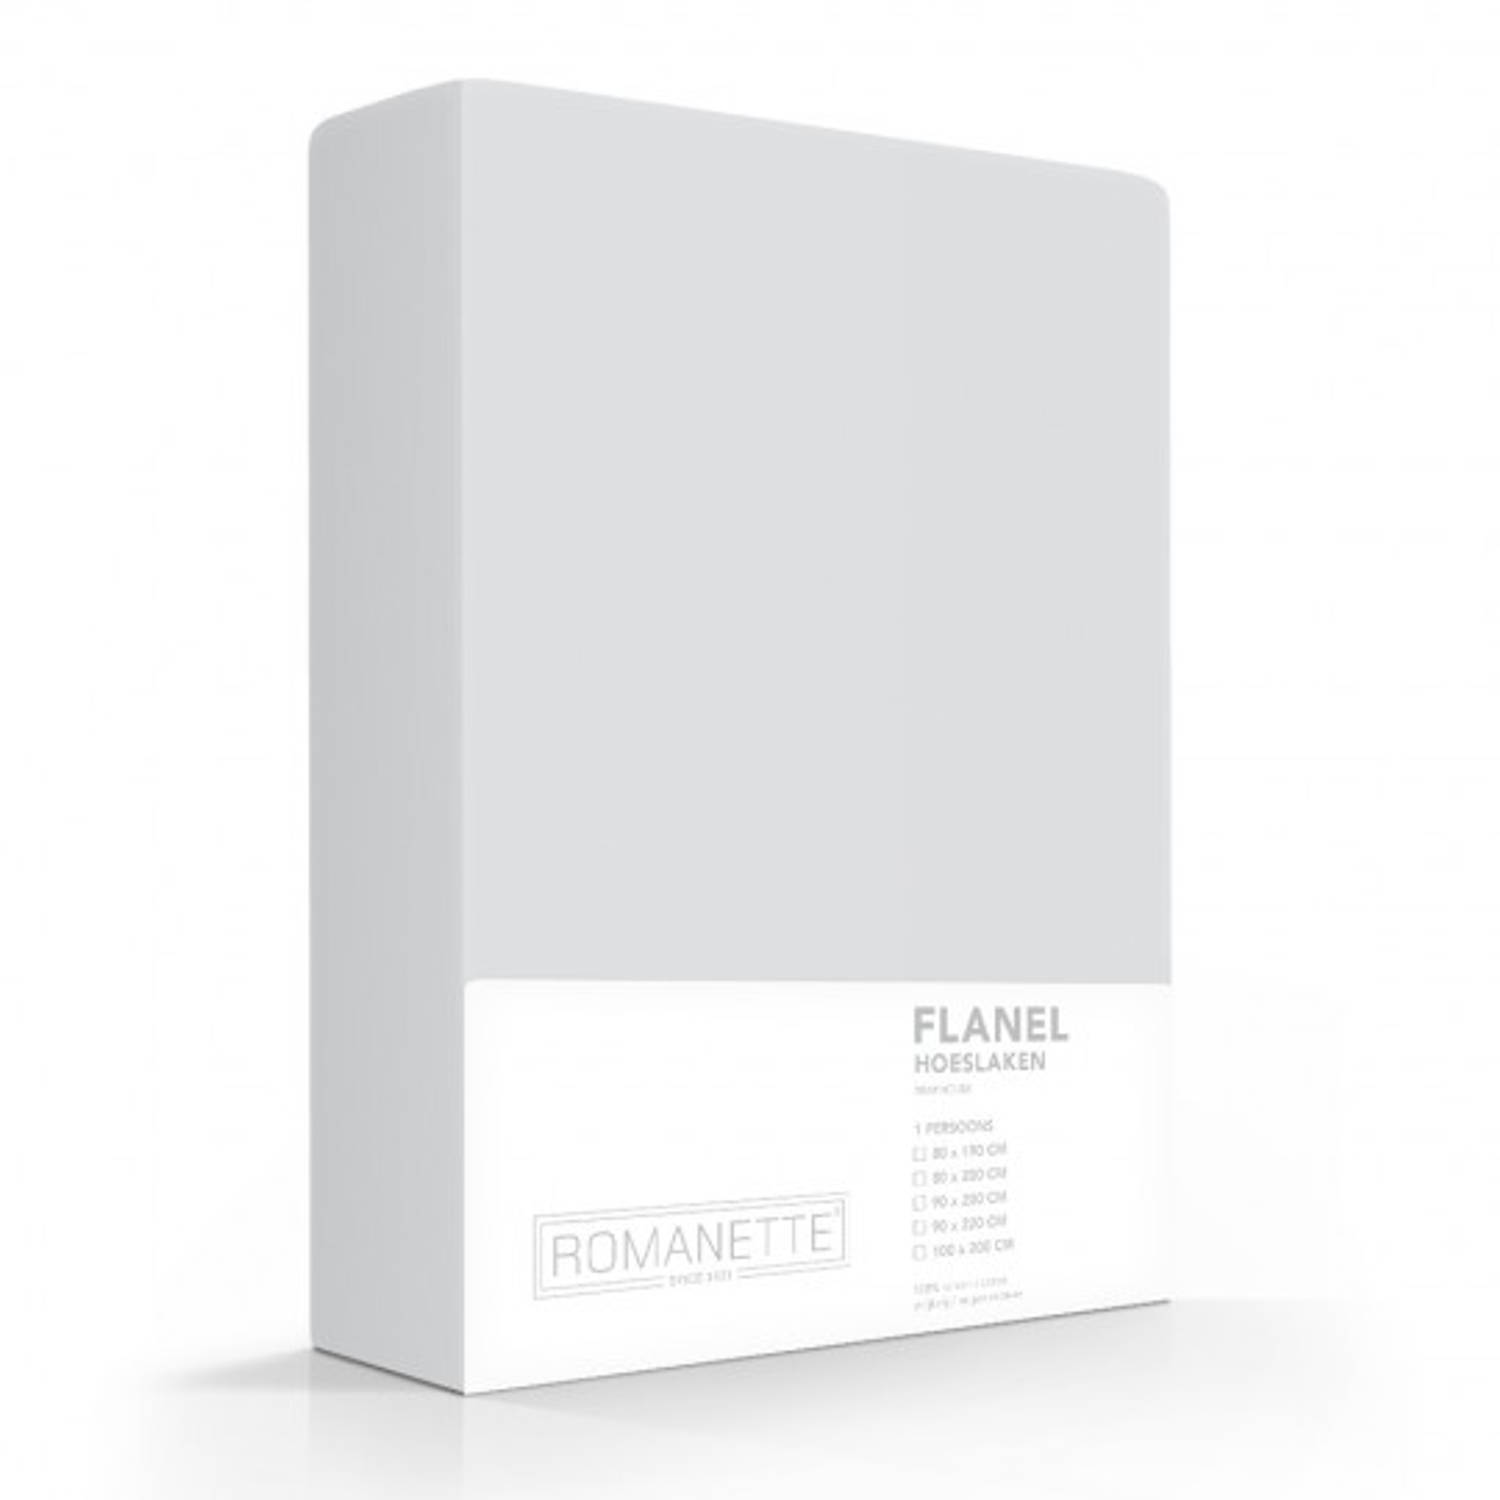 Flanellen Hoeslaken Zilver Romanette-80 x 200 cm